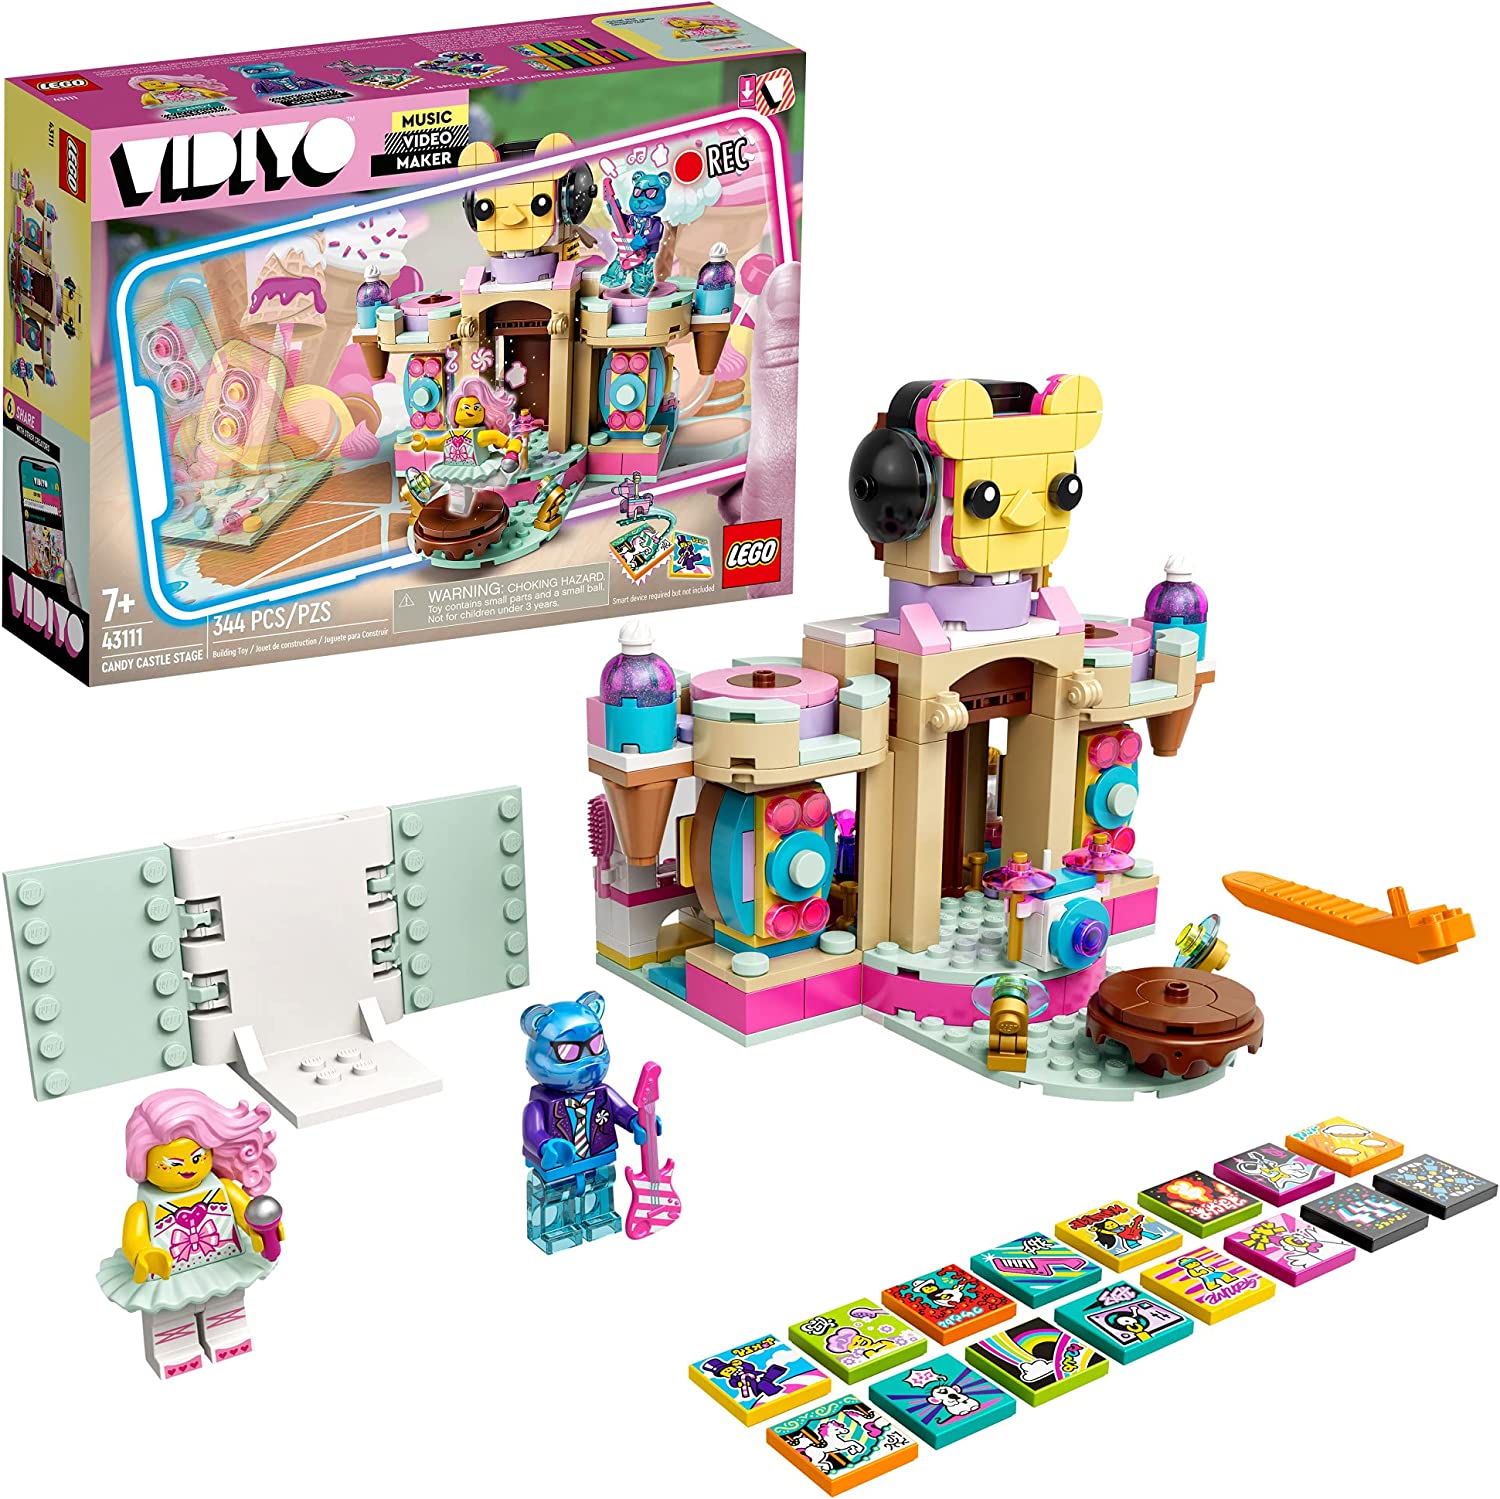 344-Pc LEGO VIDIYO Candy Castle Stage $18.89 shipped w/ Prime